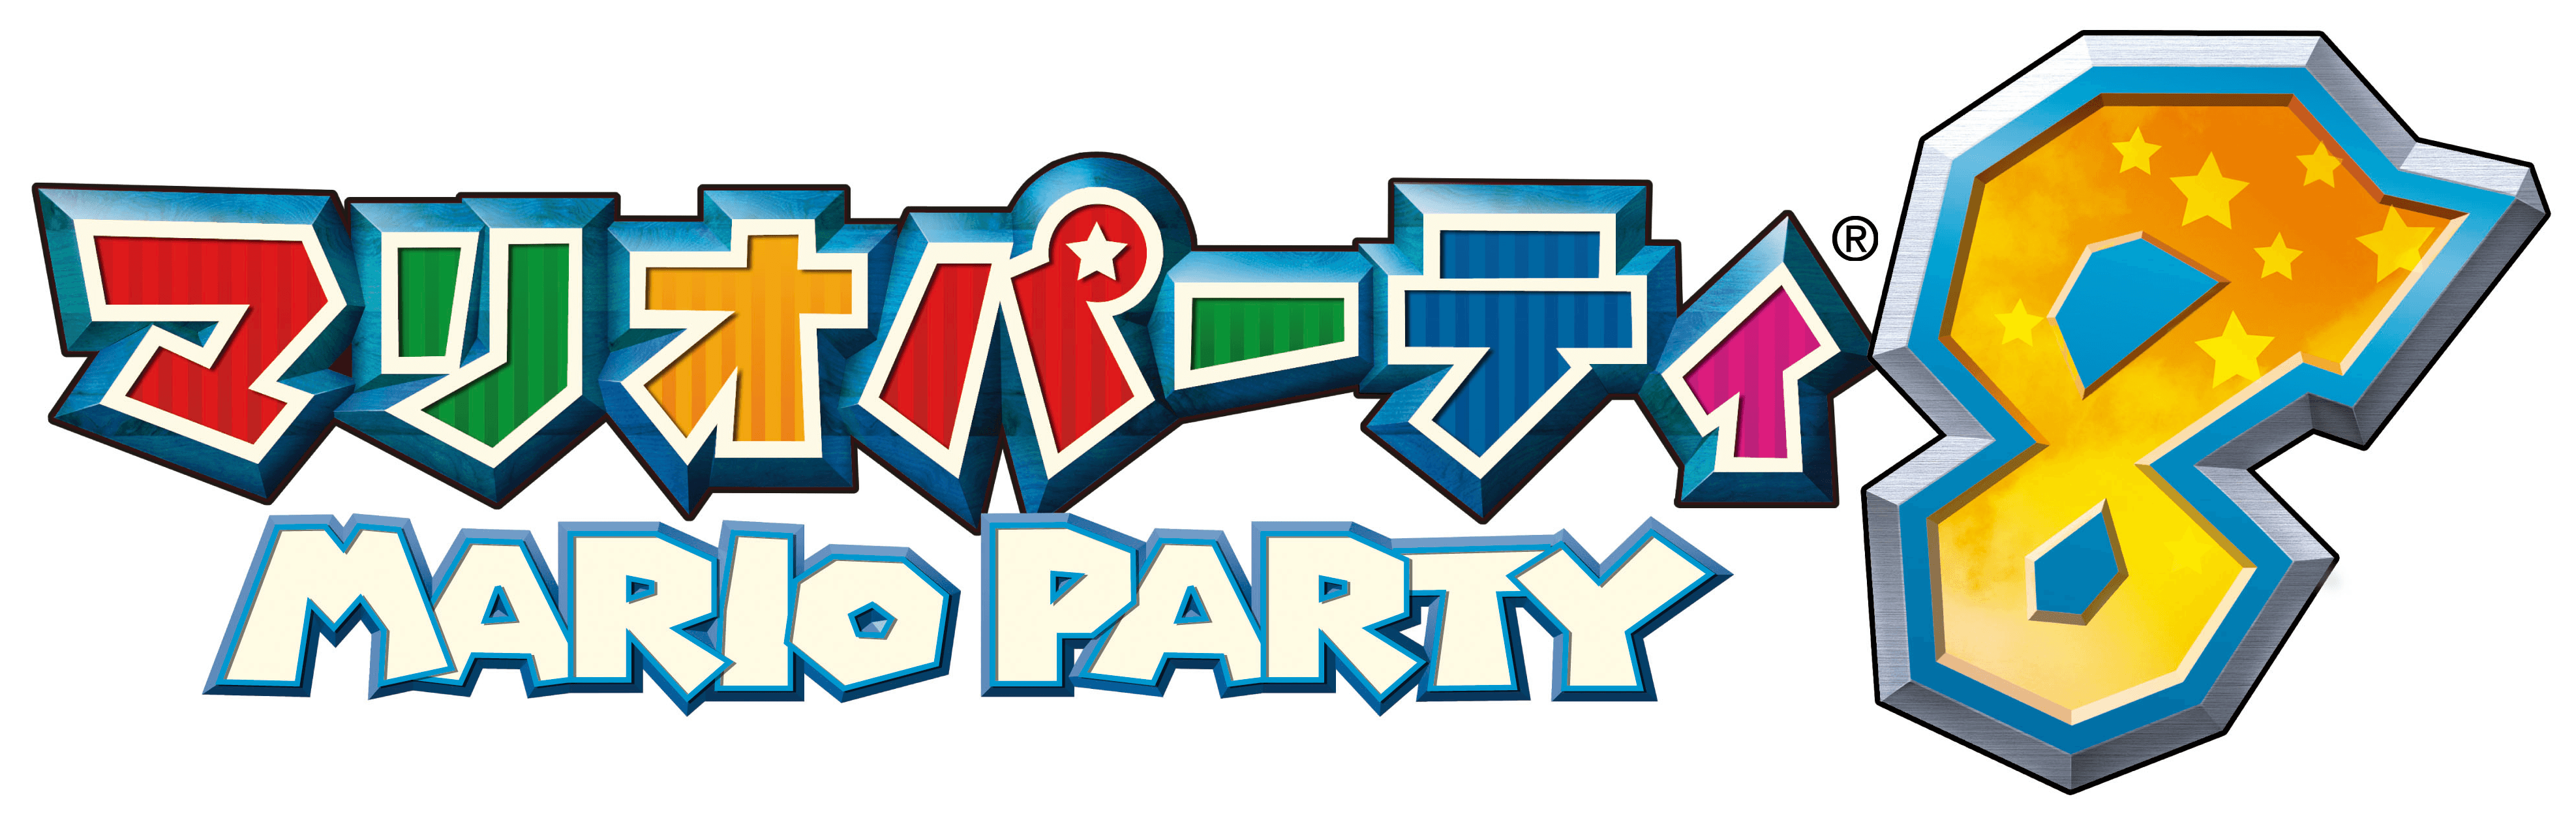 Mario Party 8 - Wikipedia